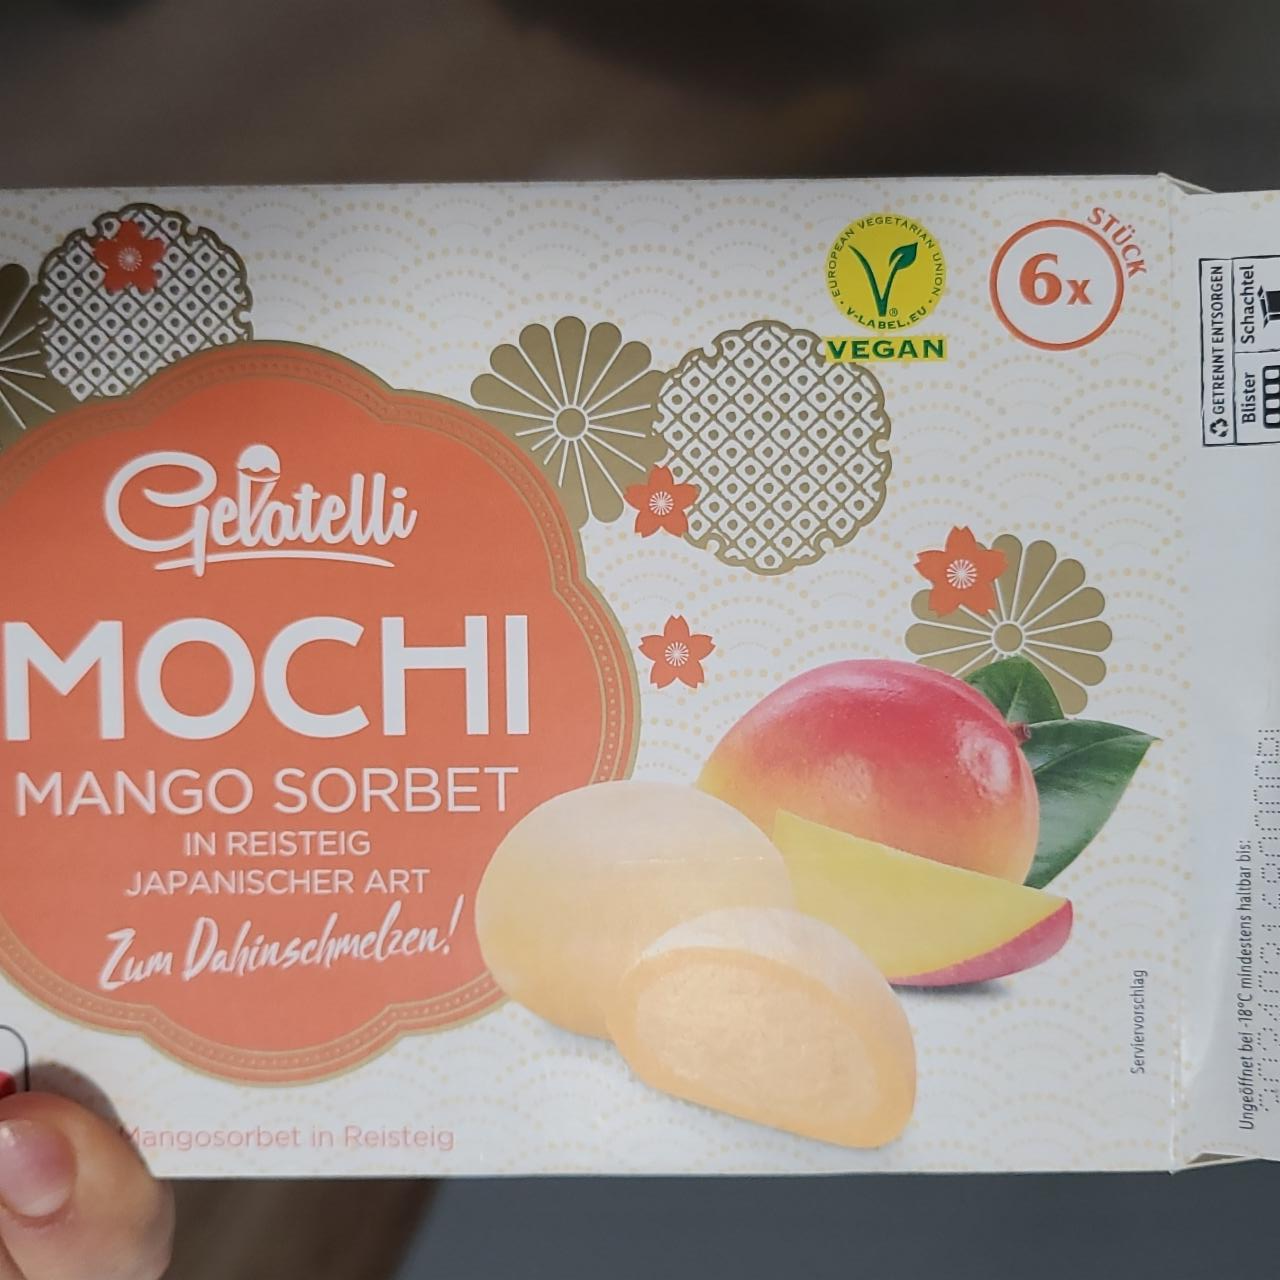 Фото - Mochi mango sorbet Gelatelli